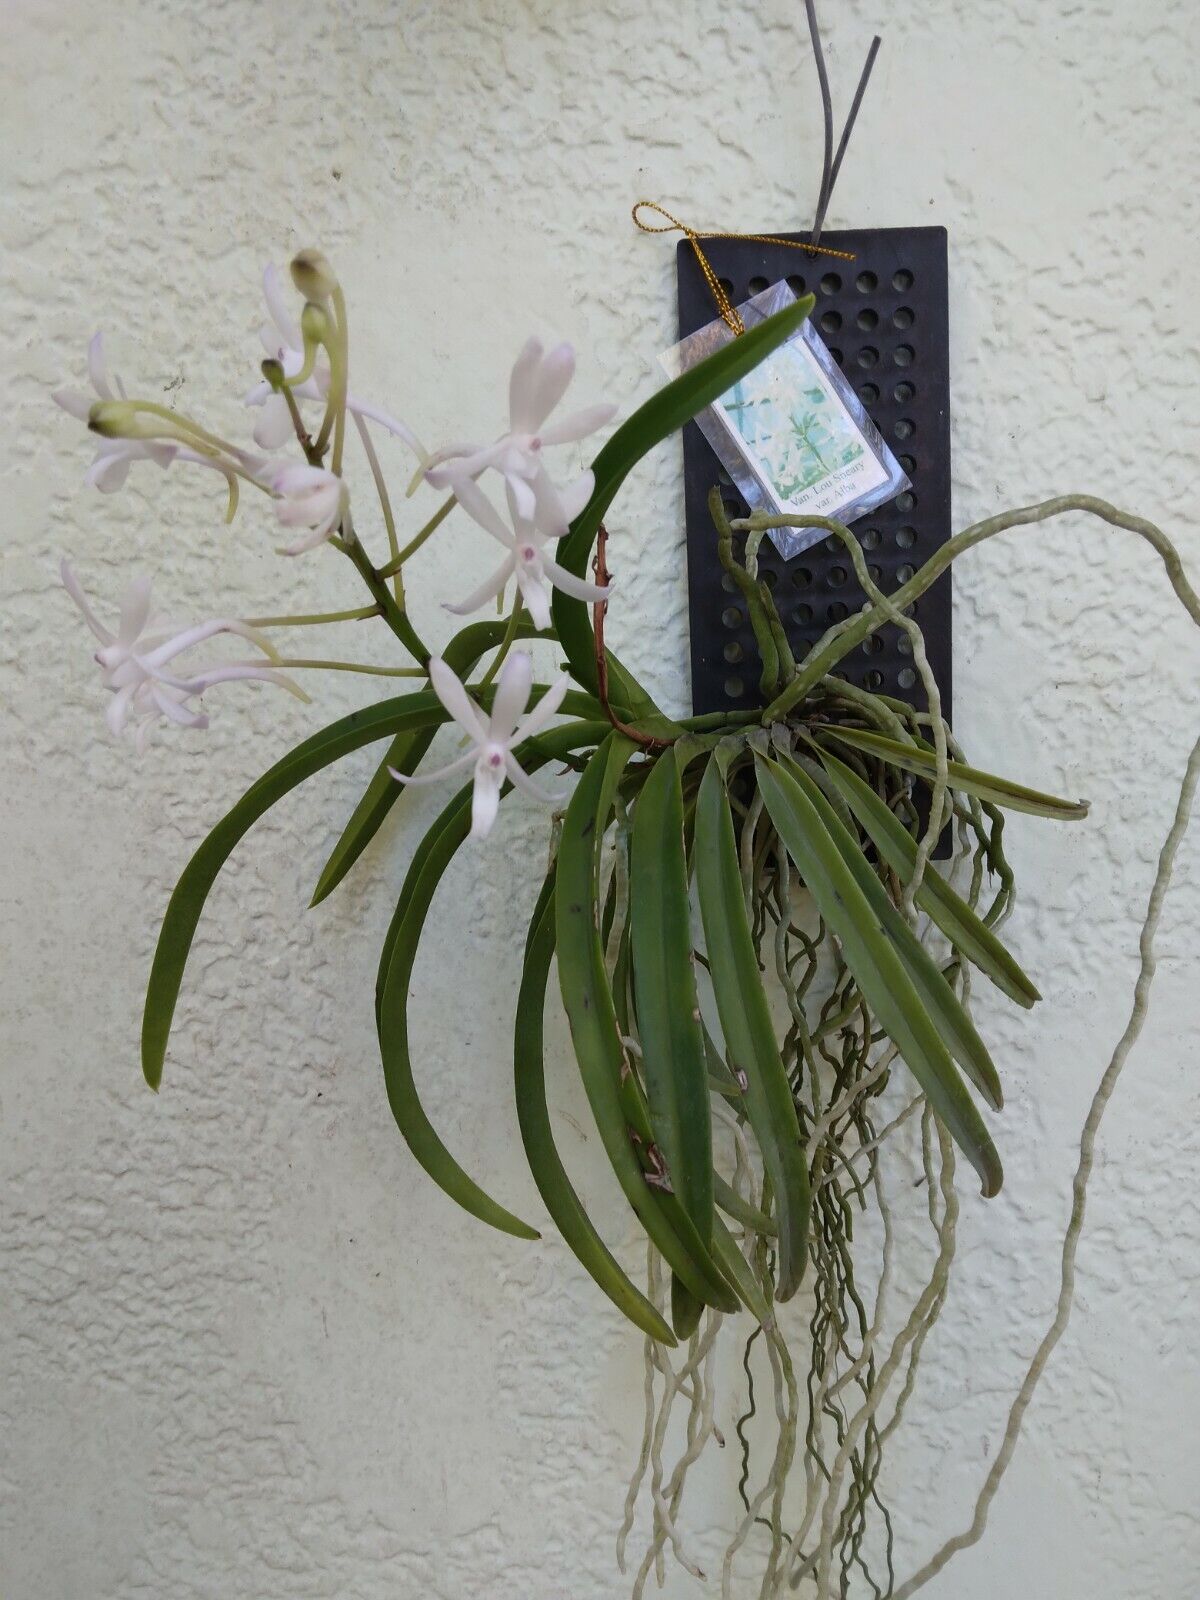 Orchid Vanda Lou Sneary alba